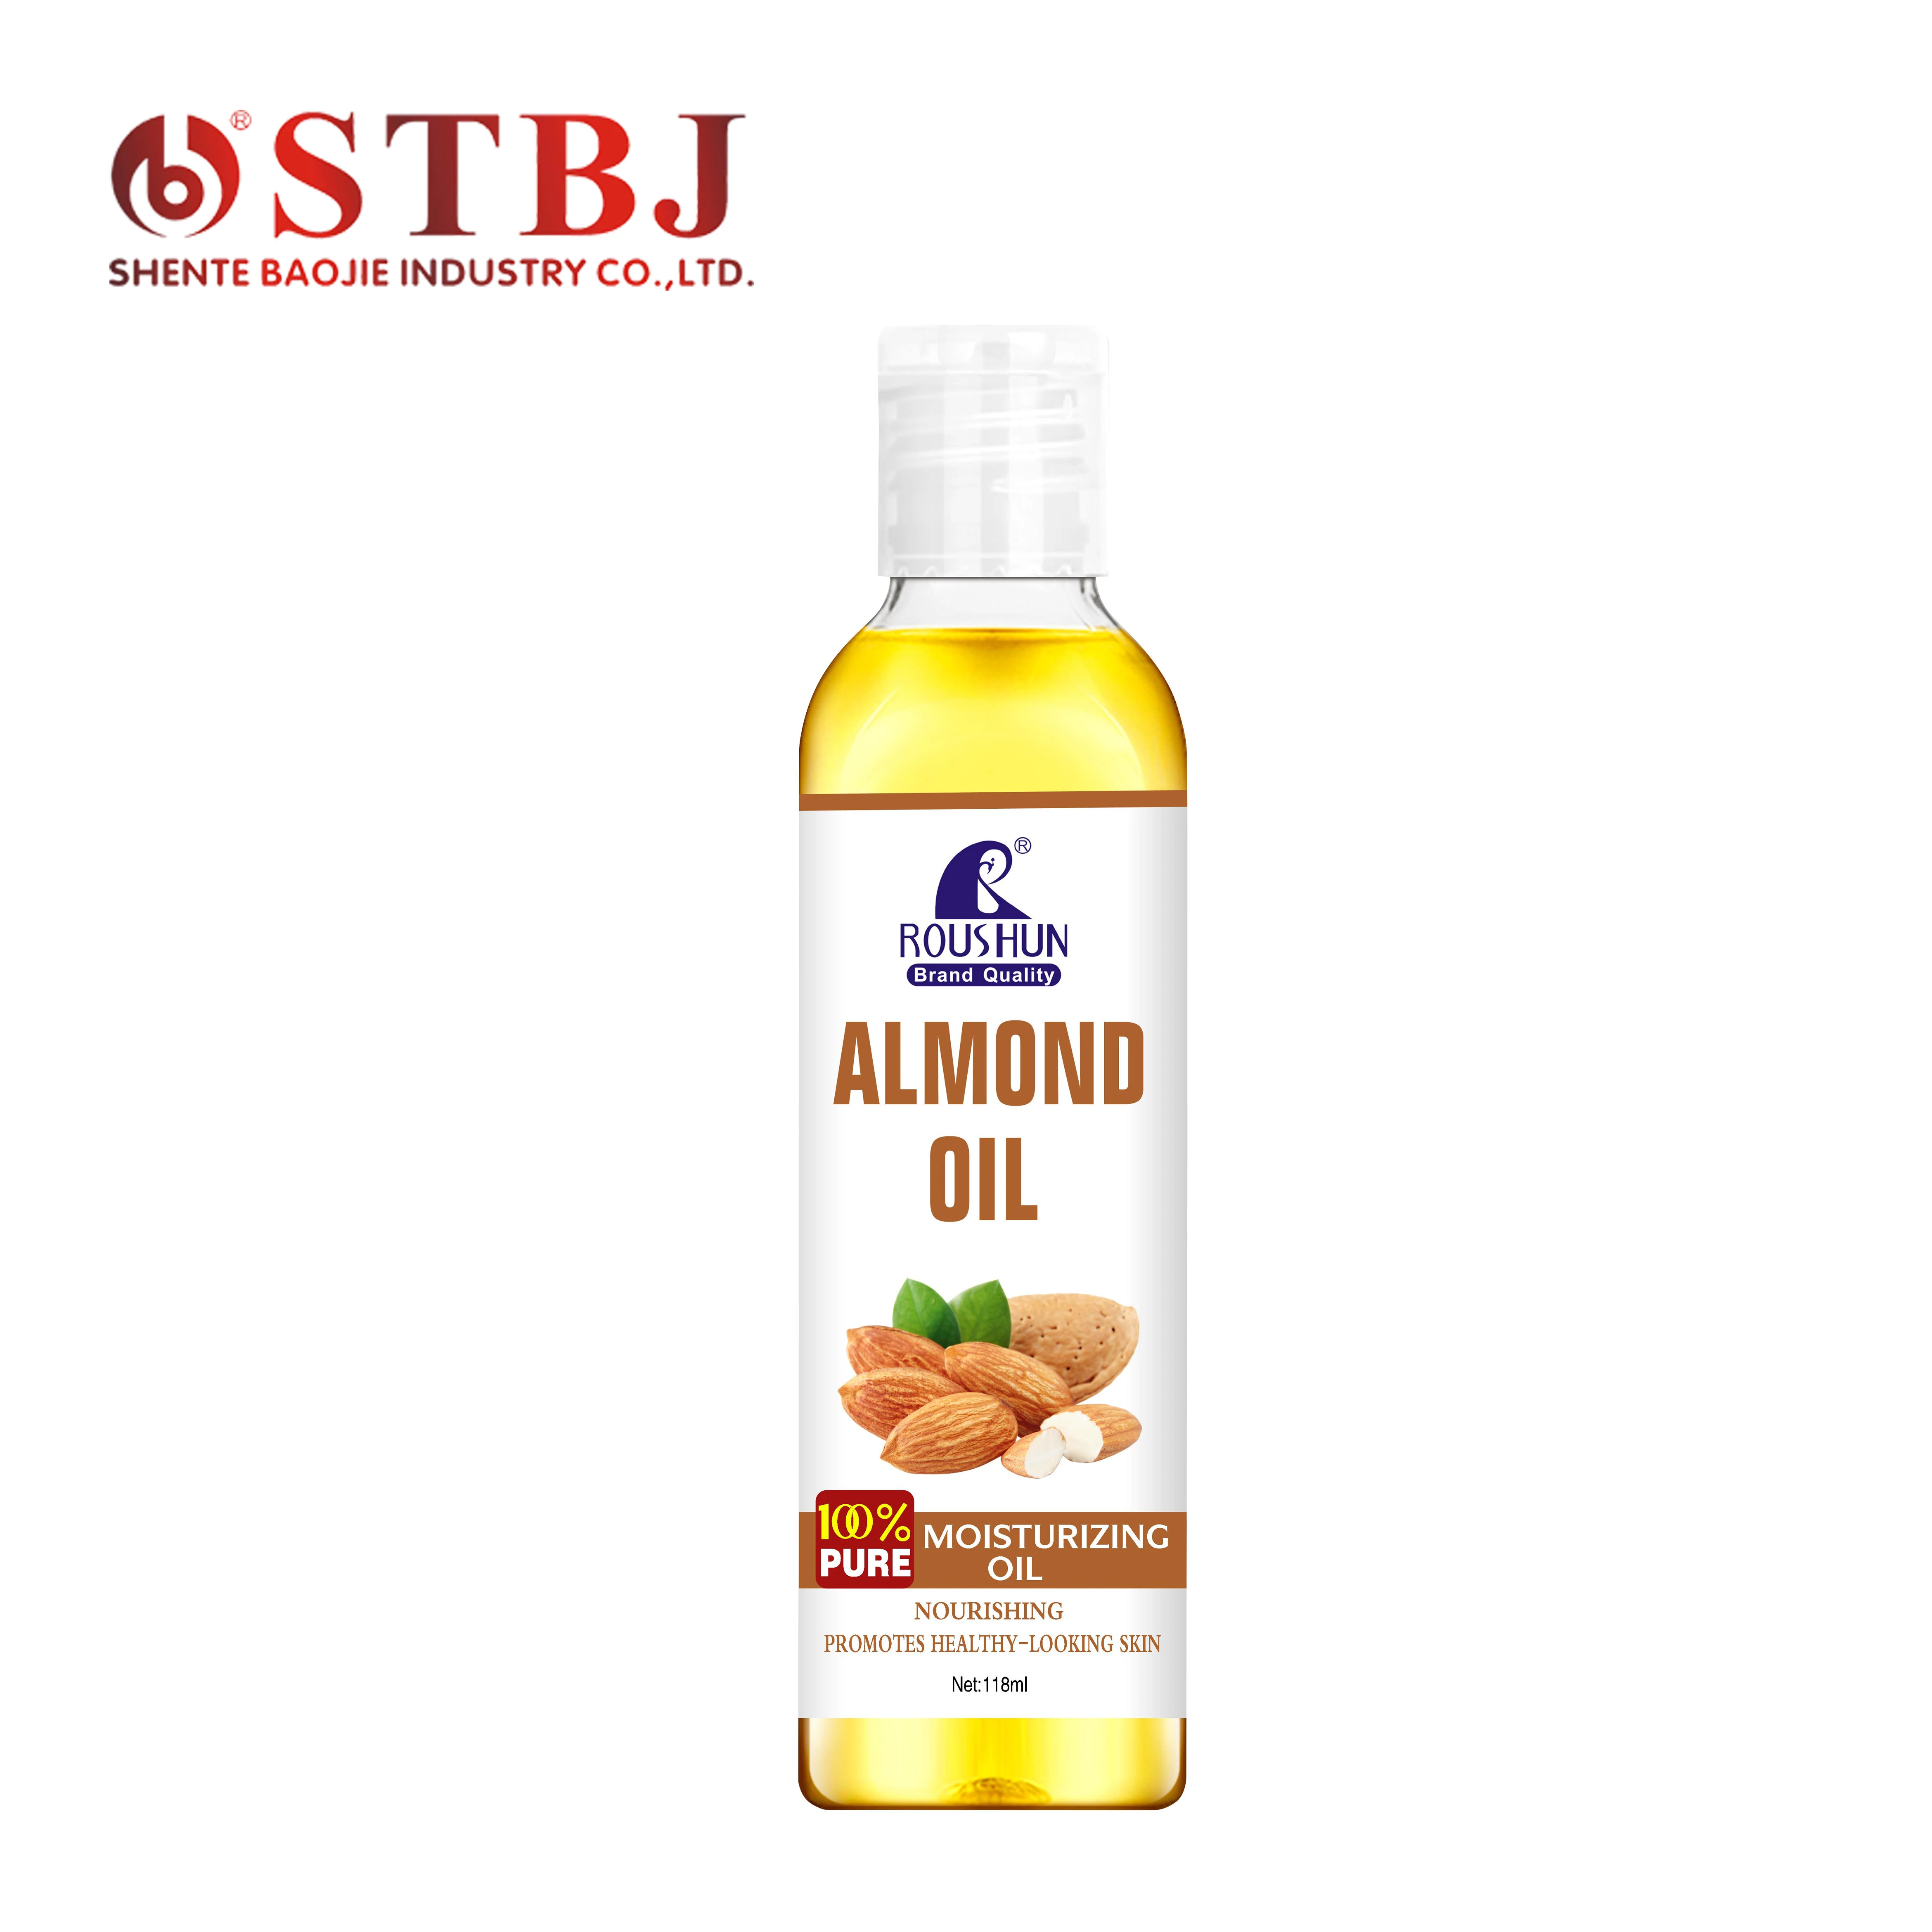 ROUSHUN 100% pure MOISTURIZING OIL NOURISHING PROMOTES HEALTHY-LOOKING SKIN almond oil